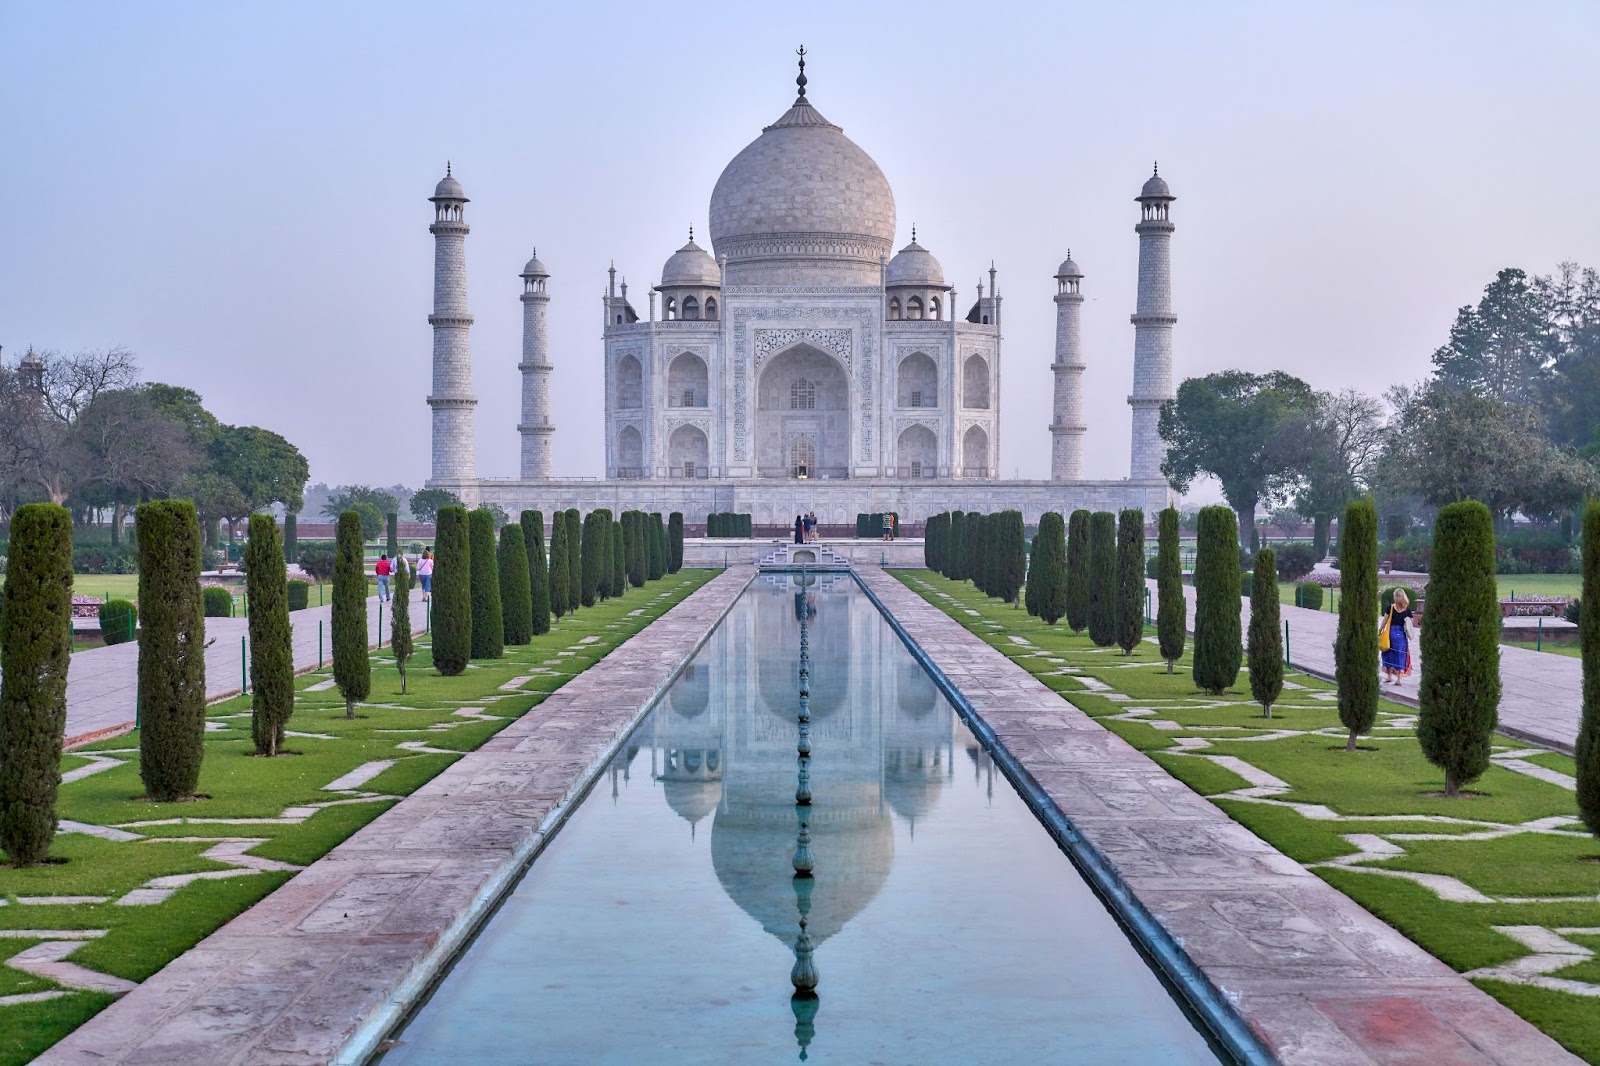 An image of the Taj Mahal